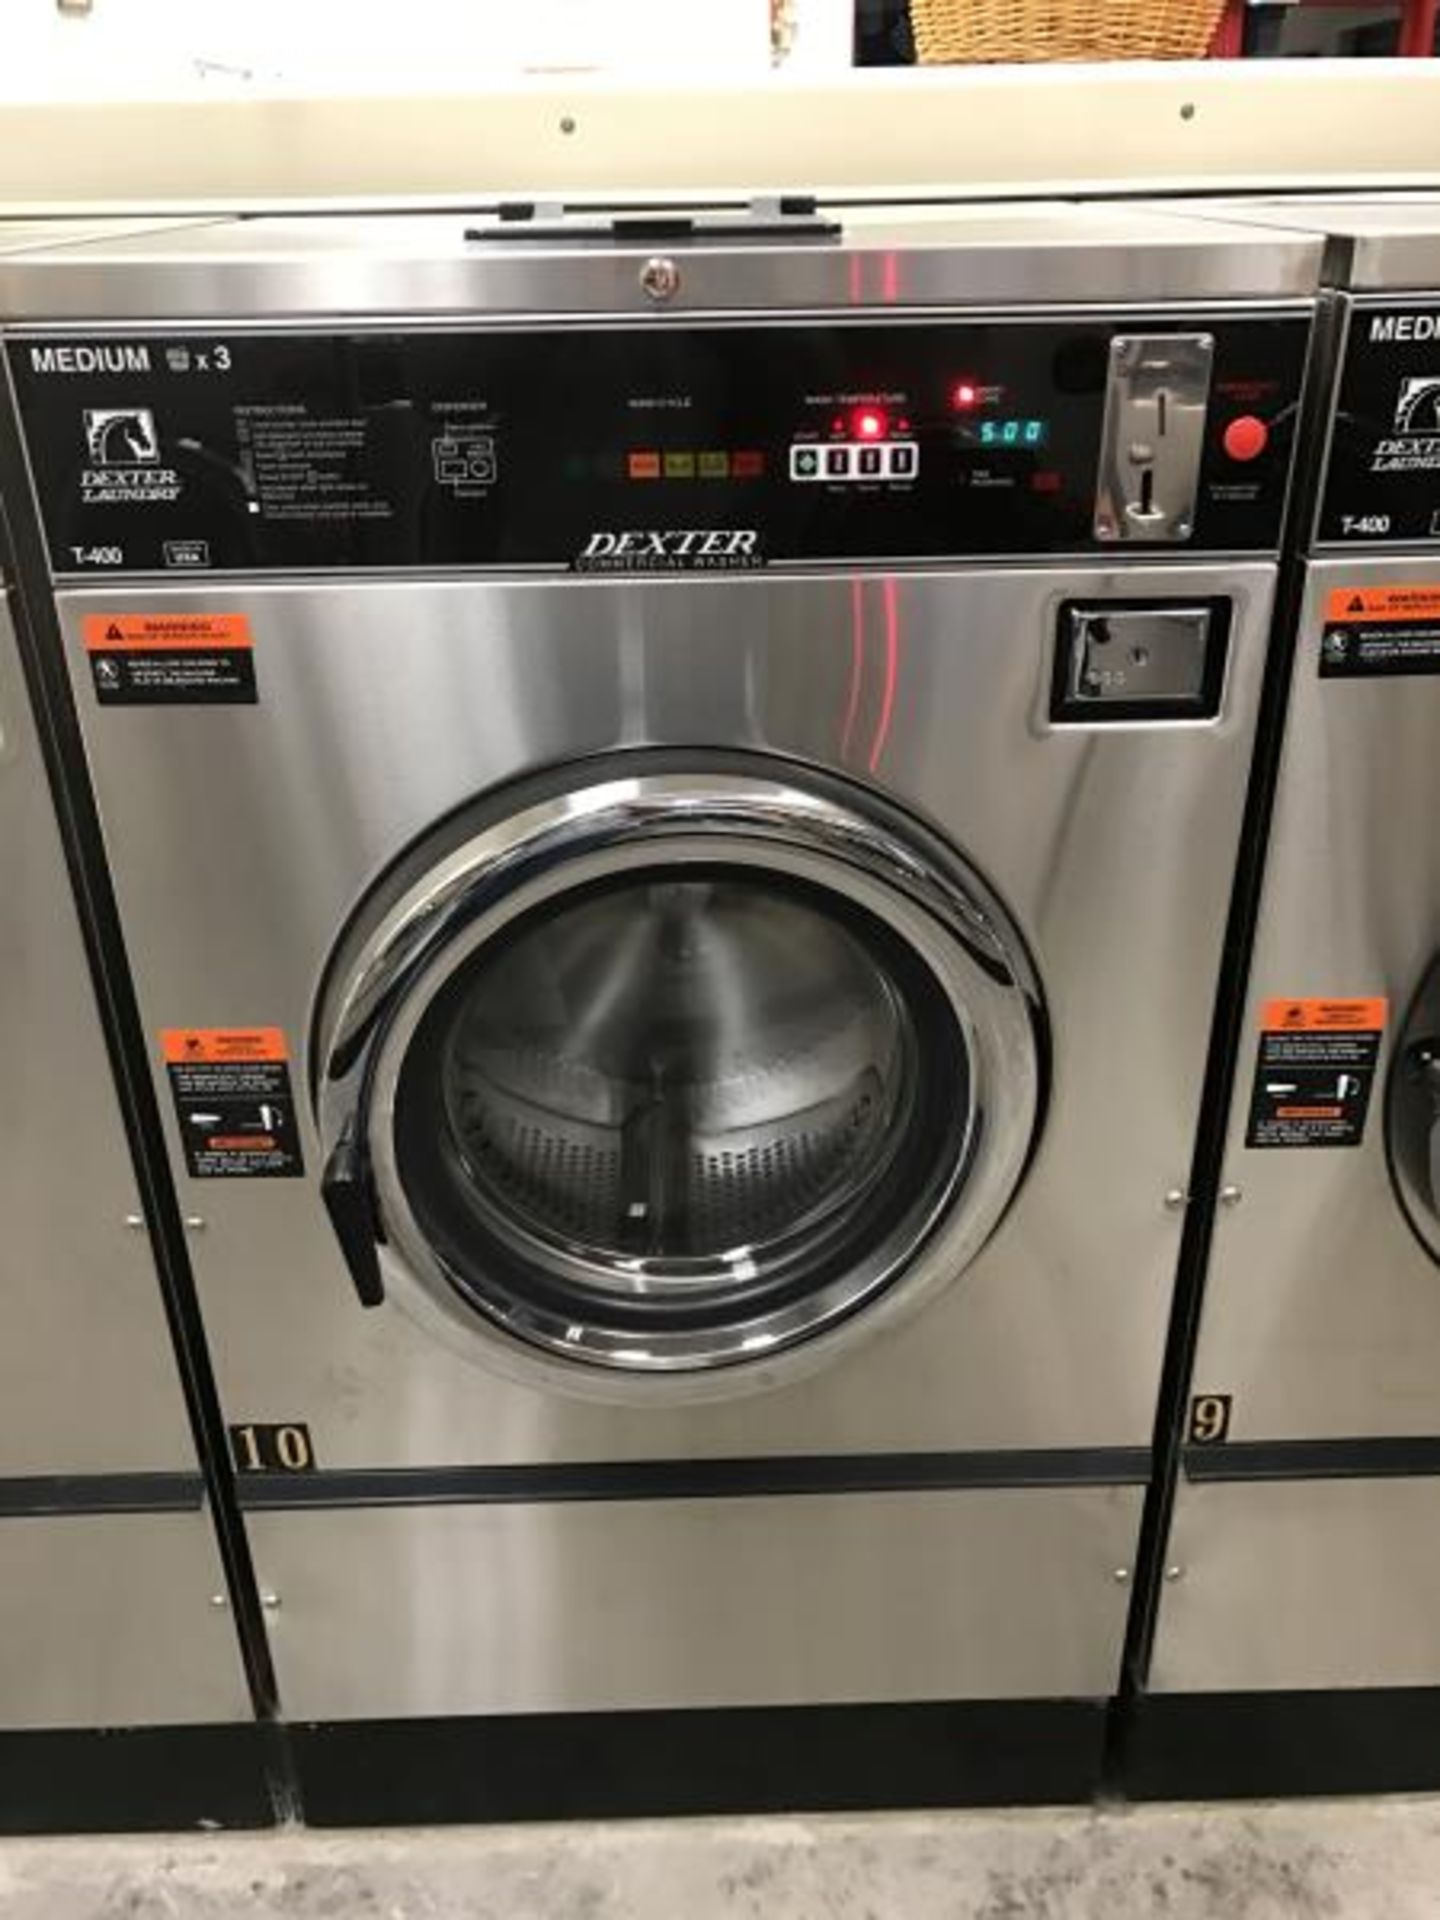 Dexter Commercial Washing Machine, Medium x 3, 30 Lbs., Model: T-400, SN: 531762 Lbs., Model: T-400,